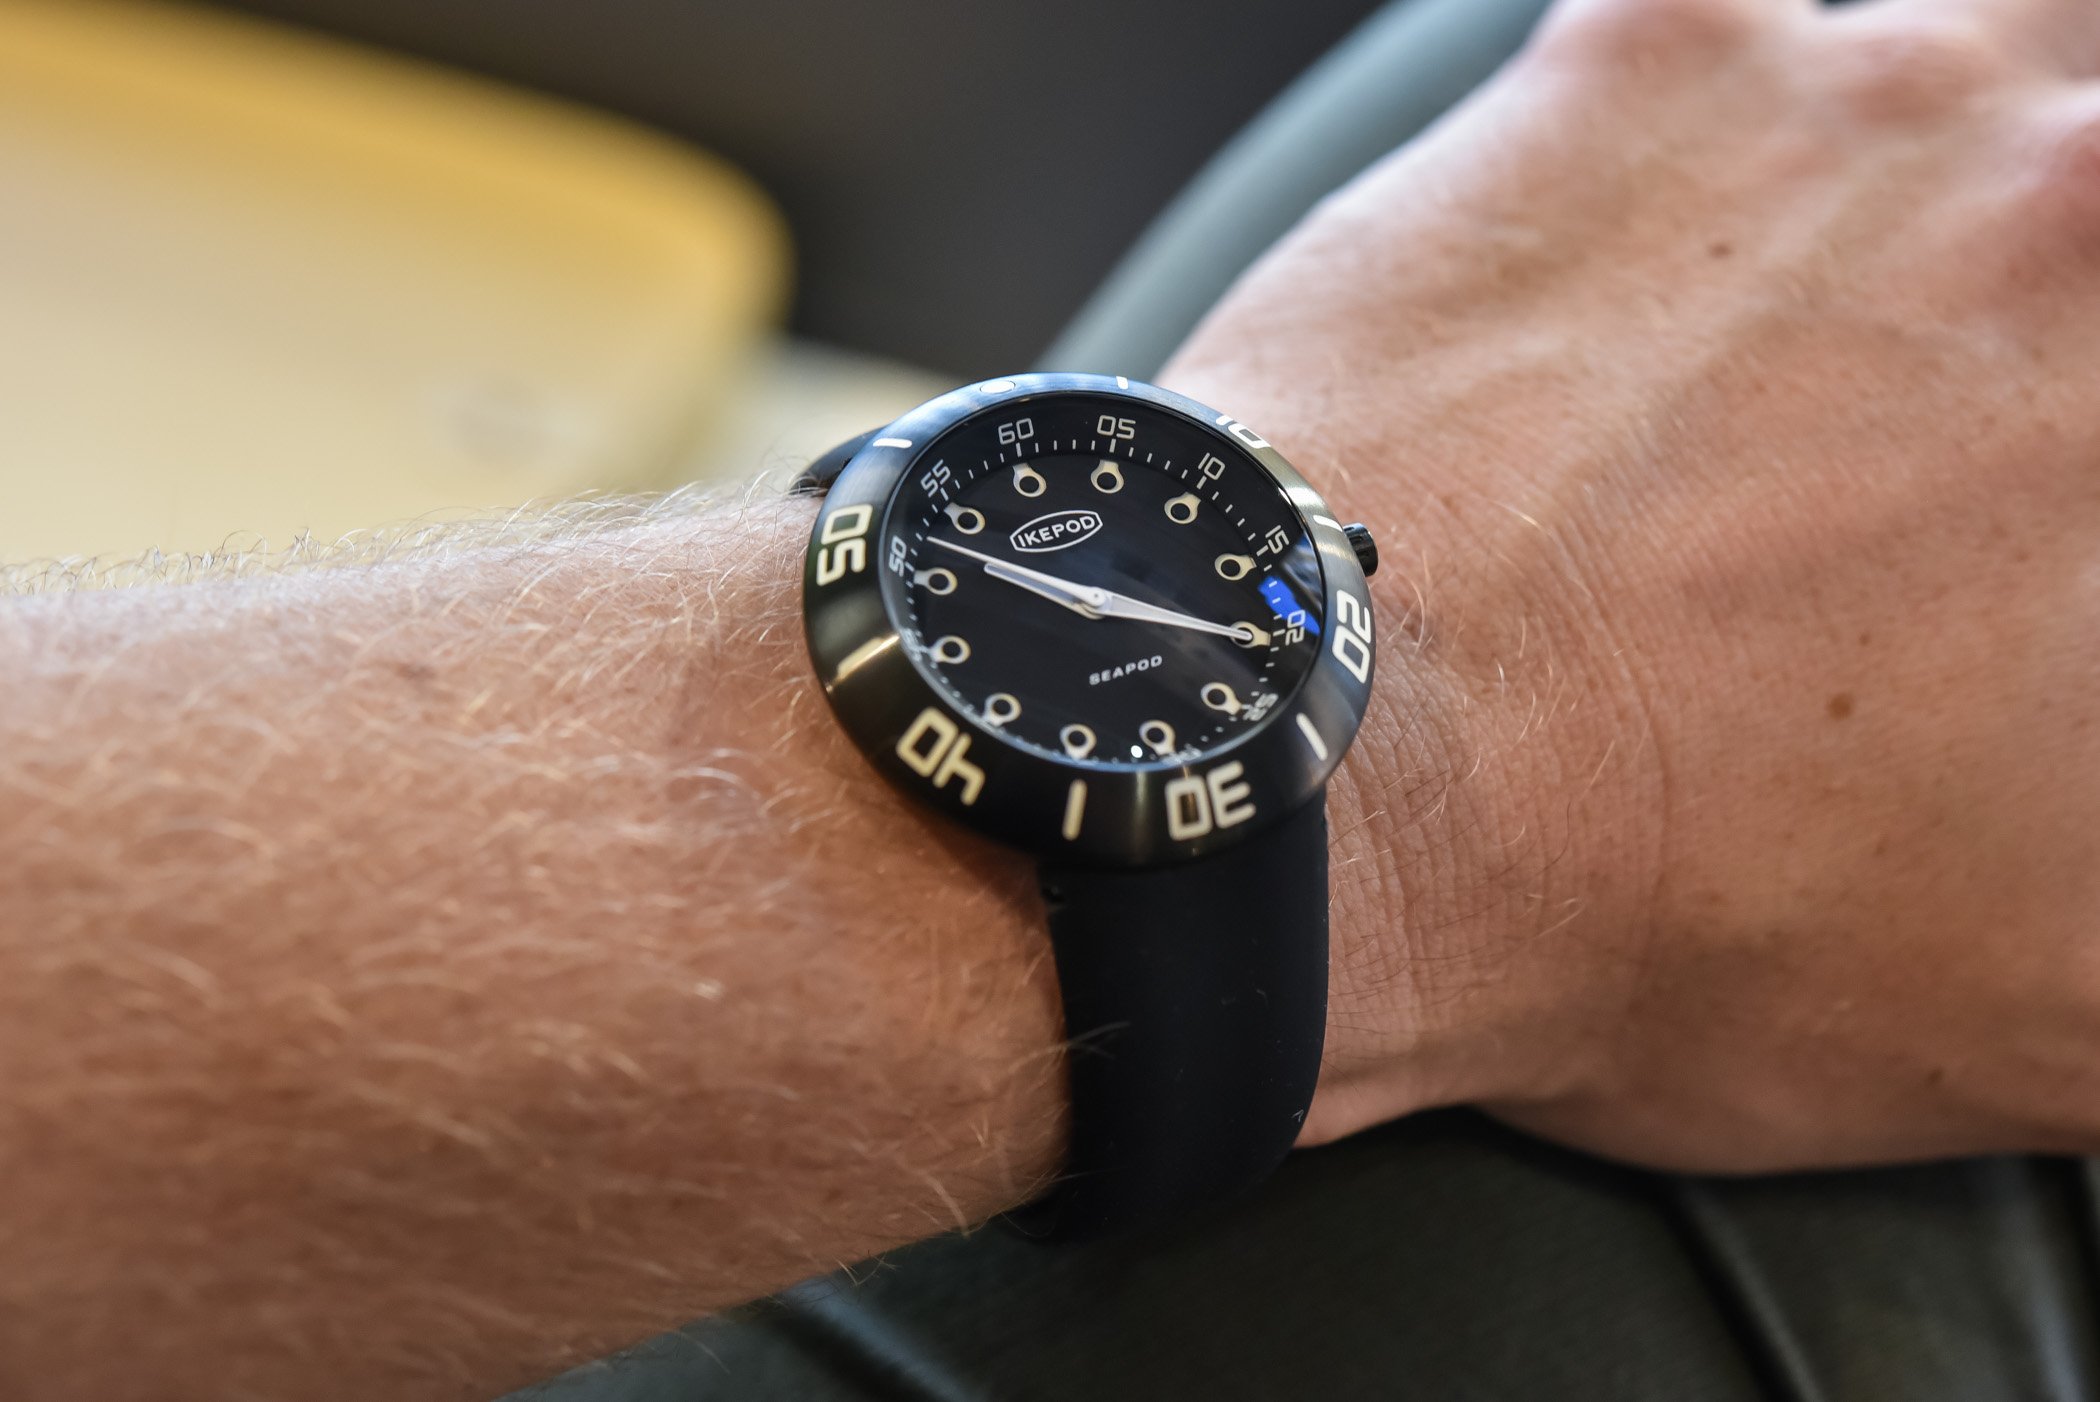 Часы для дайвинга Ikepod Seapod Collection 2021